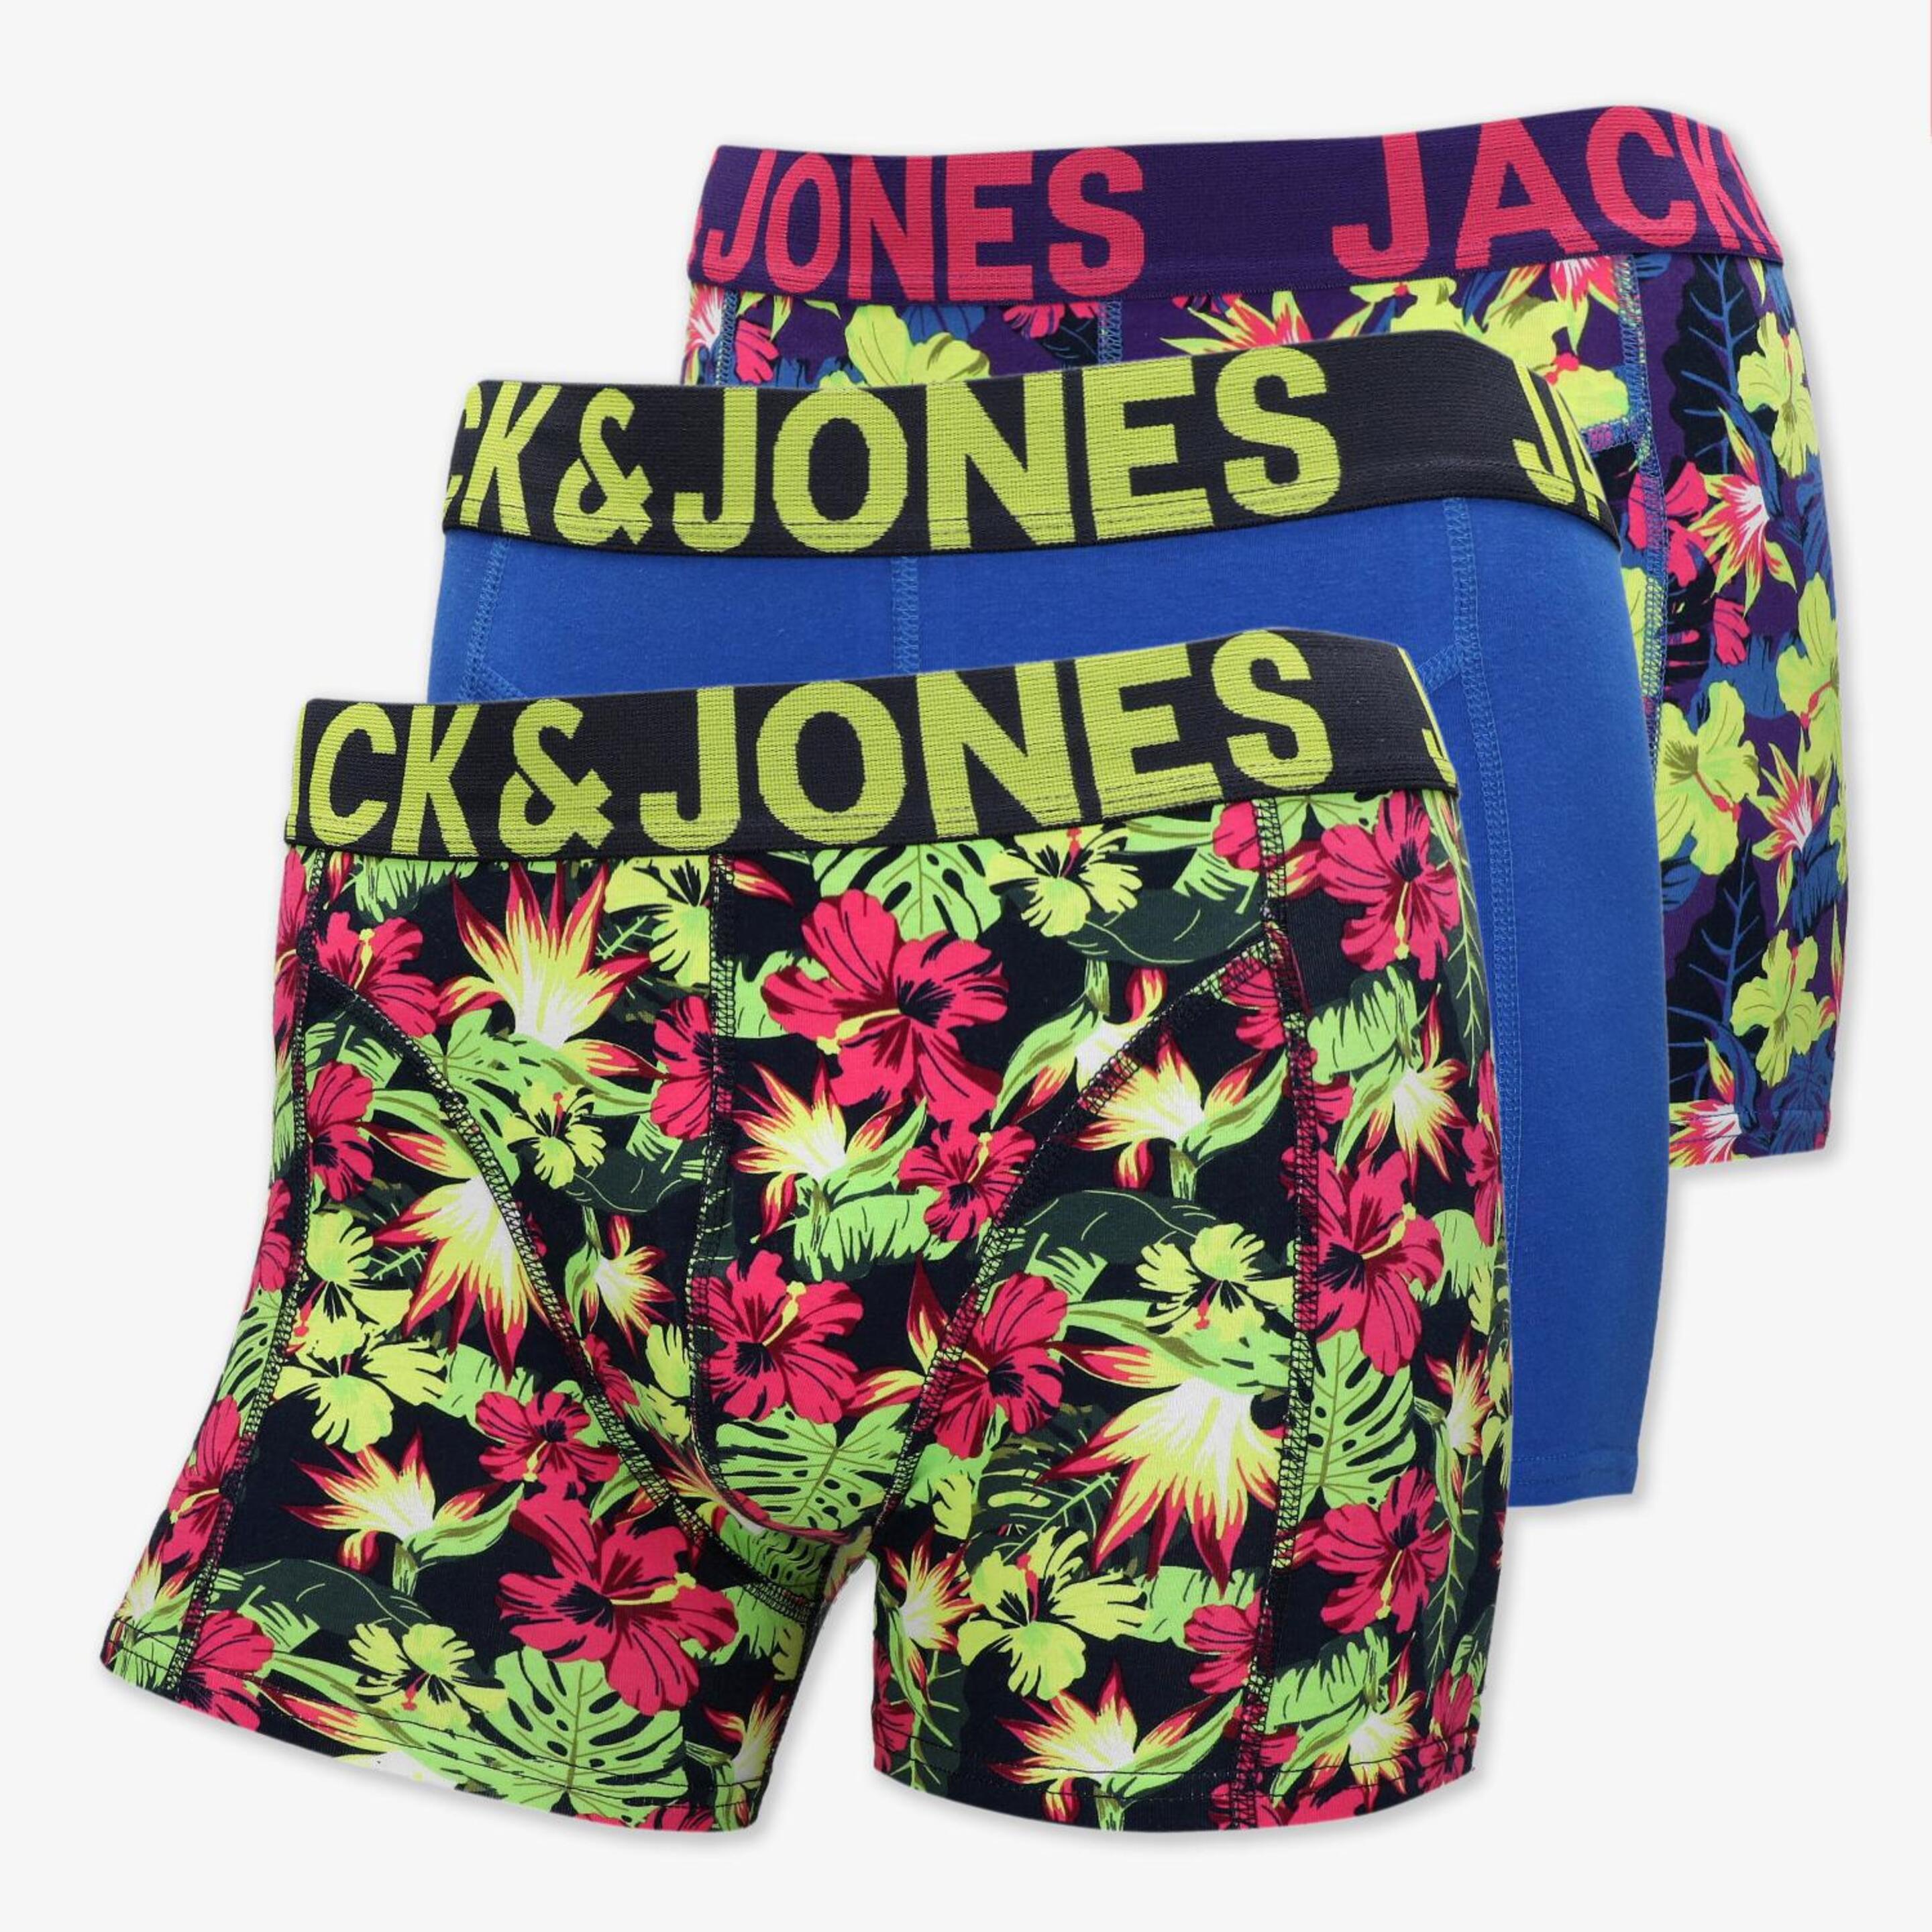 Jack & Jones Jachibiscus - multicolor - Calzoncillos Hombre